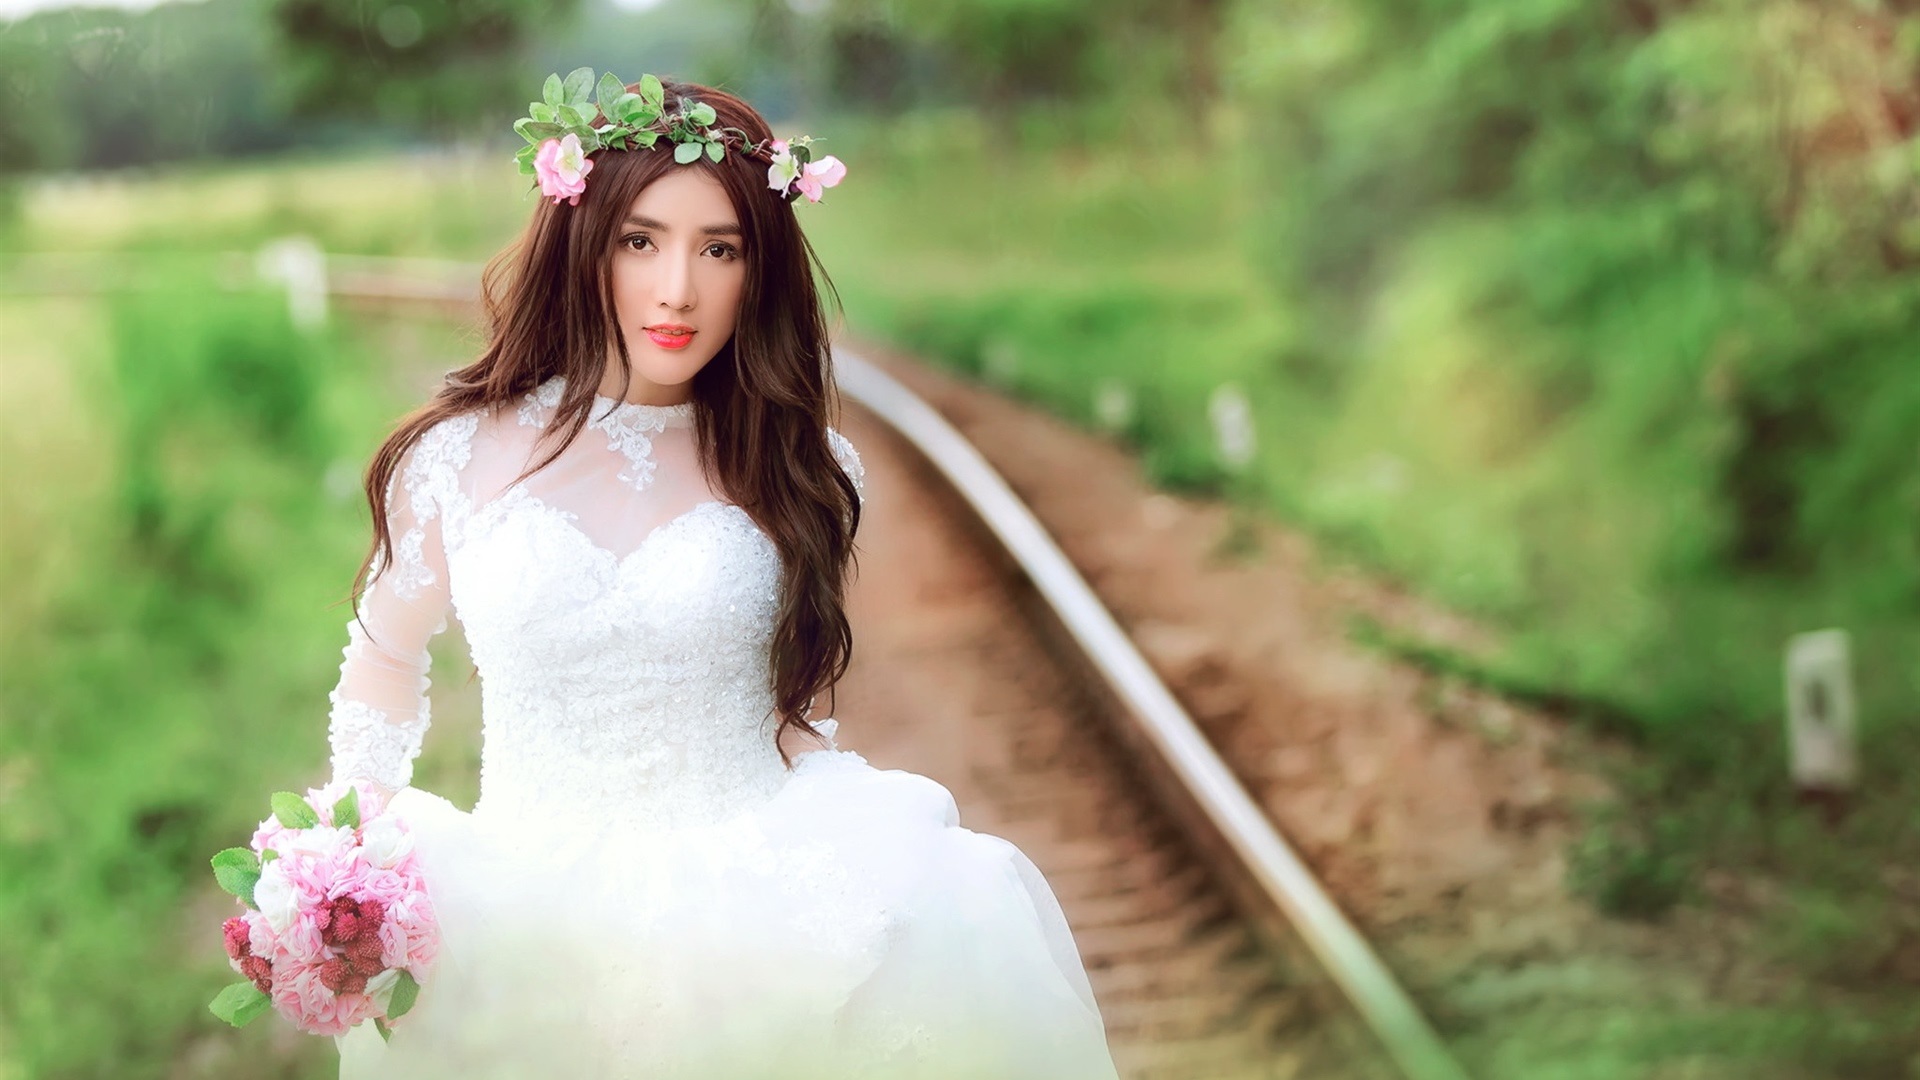 Beautiful-bride-white-dress-girl_1920x1080.jpg